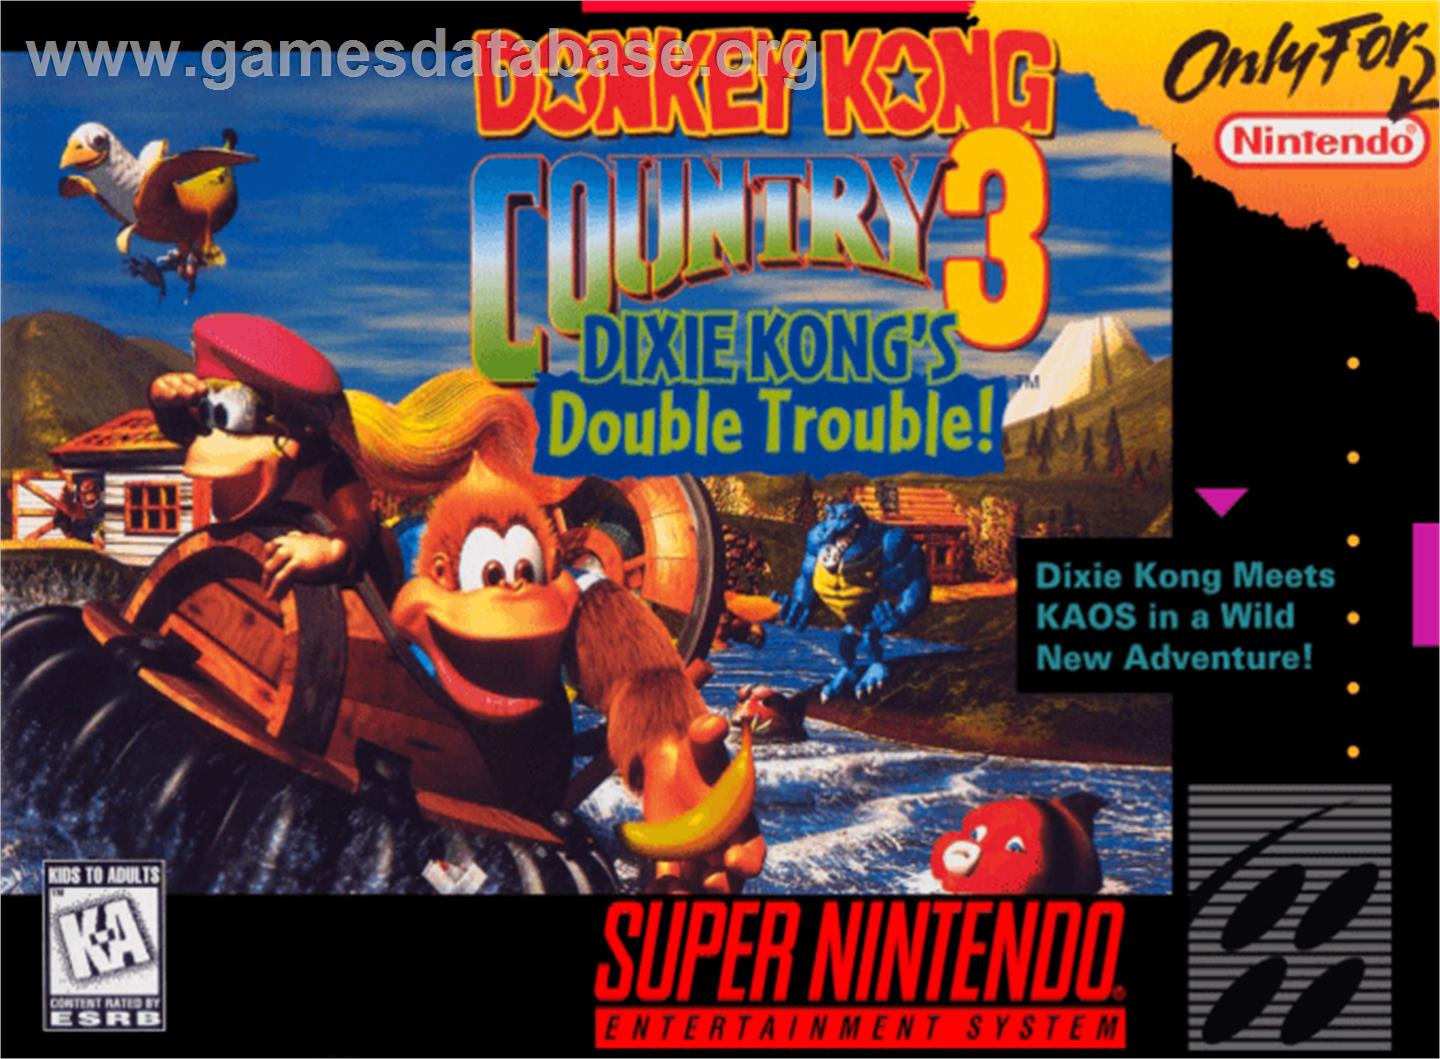 Donkey Kong Country 3: Dixie Kong's Double Trouble! - Nintendo SNES - Artwork - Box